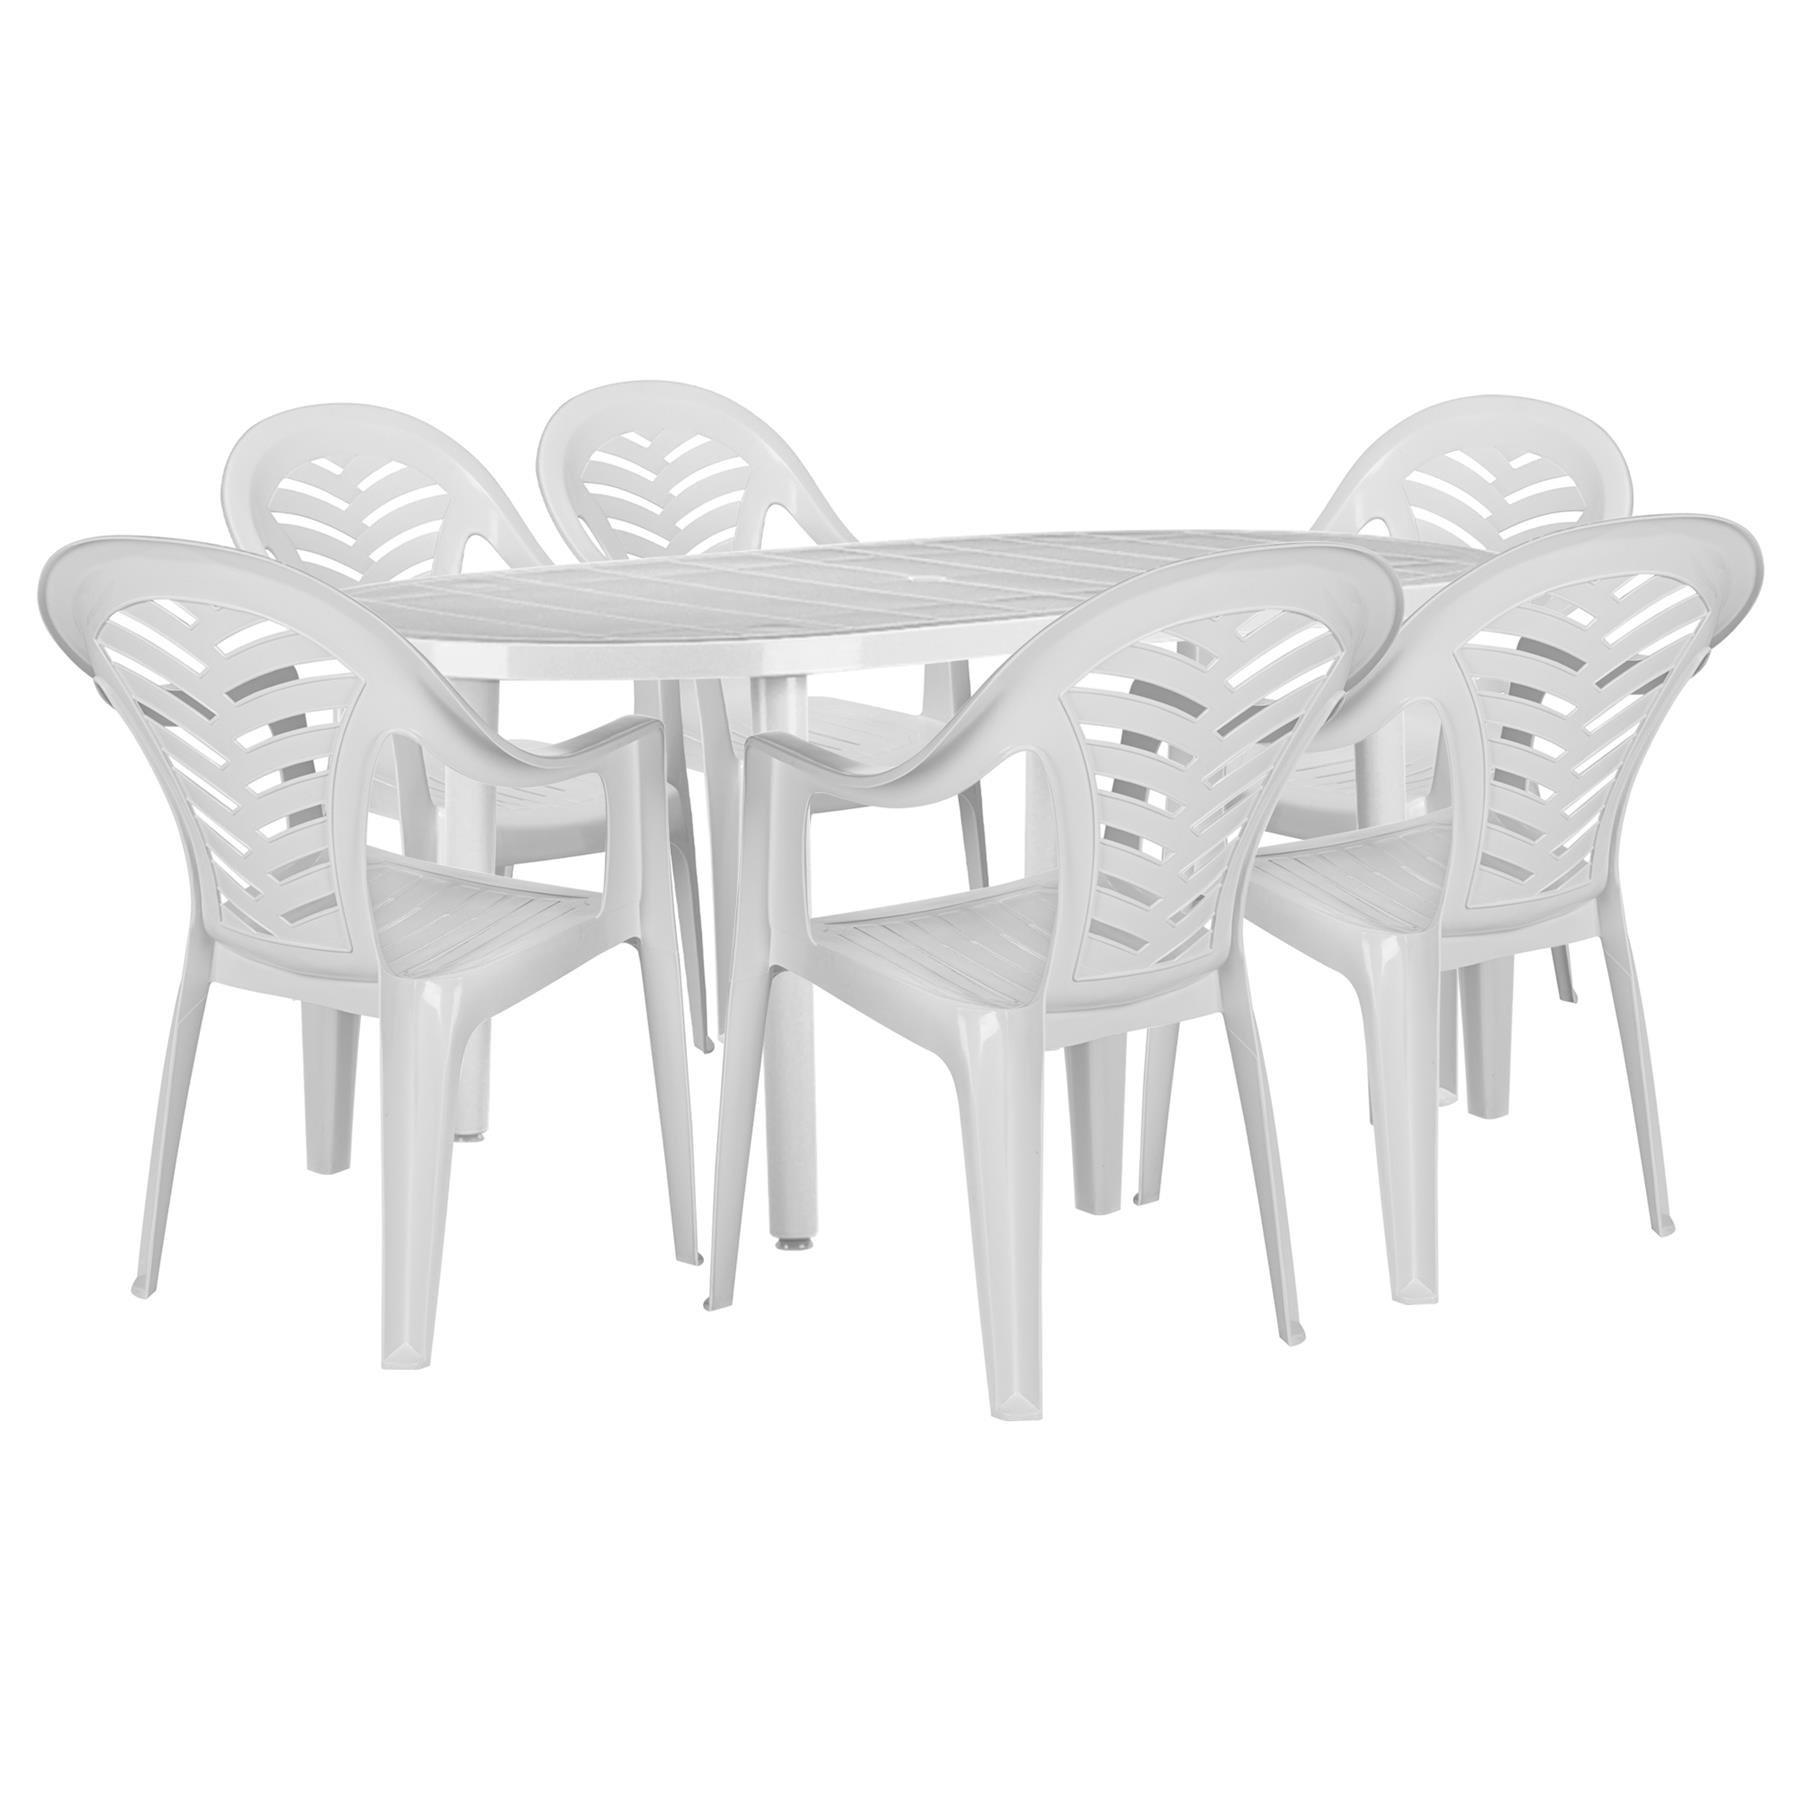 6 Seater Brava Oval Plastic Garden Dining Set 90cm x 180cm White